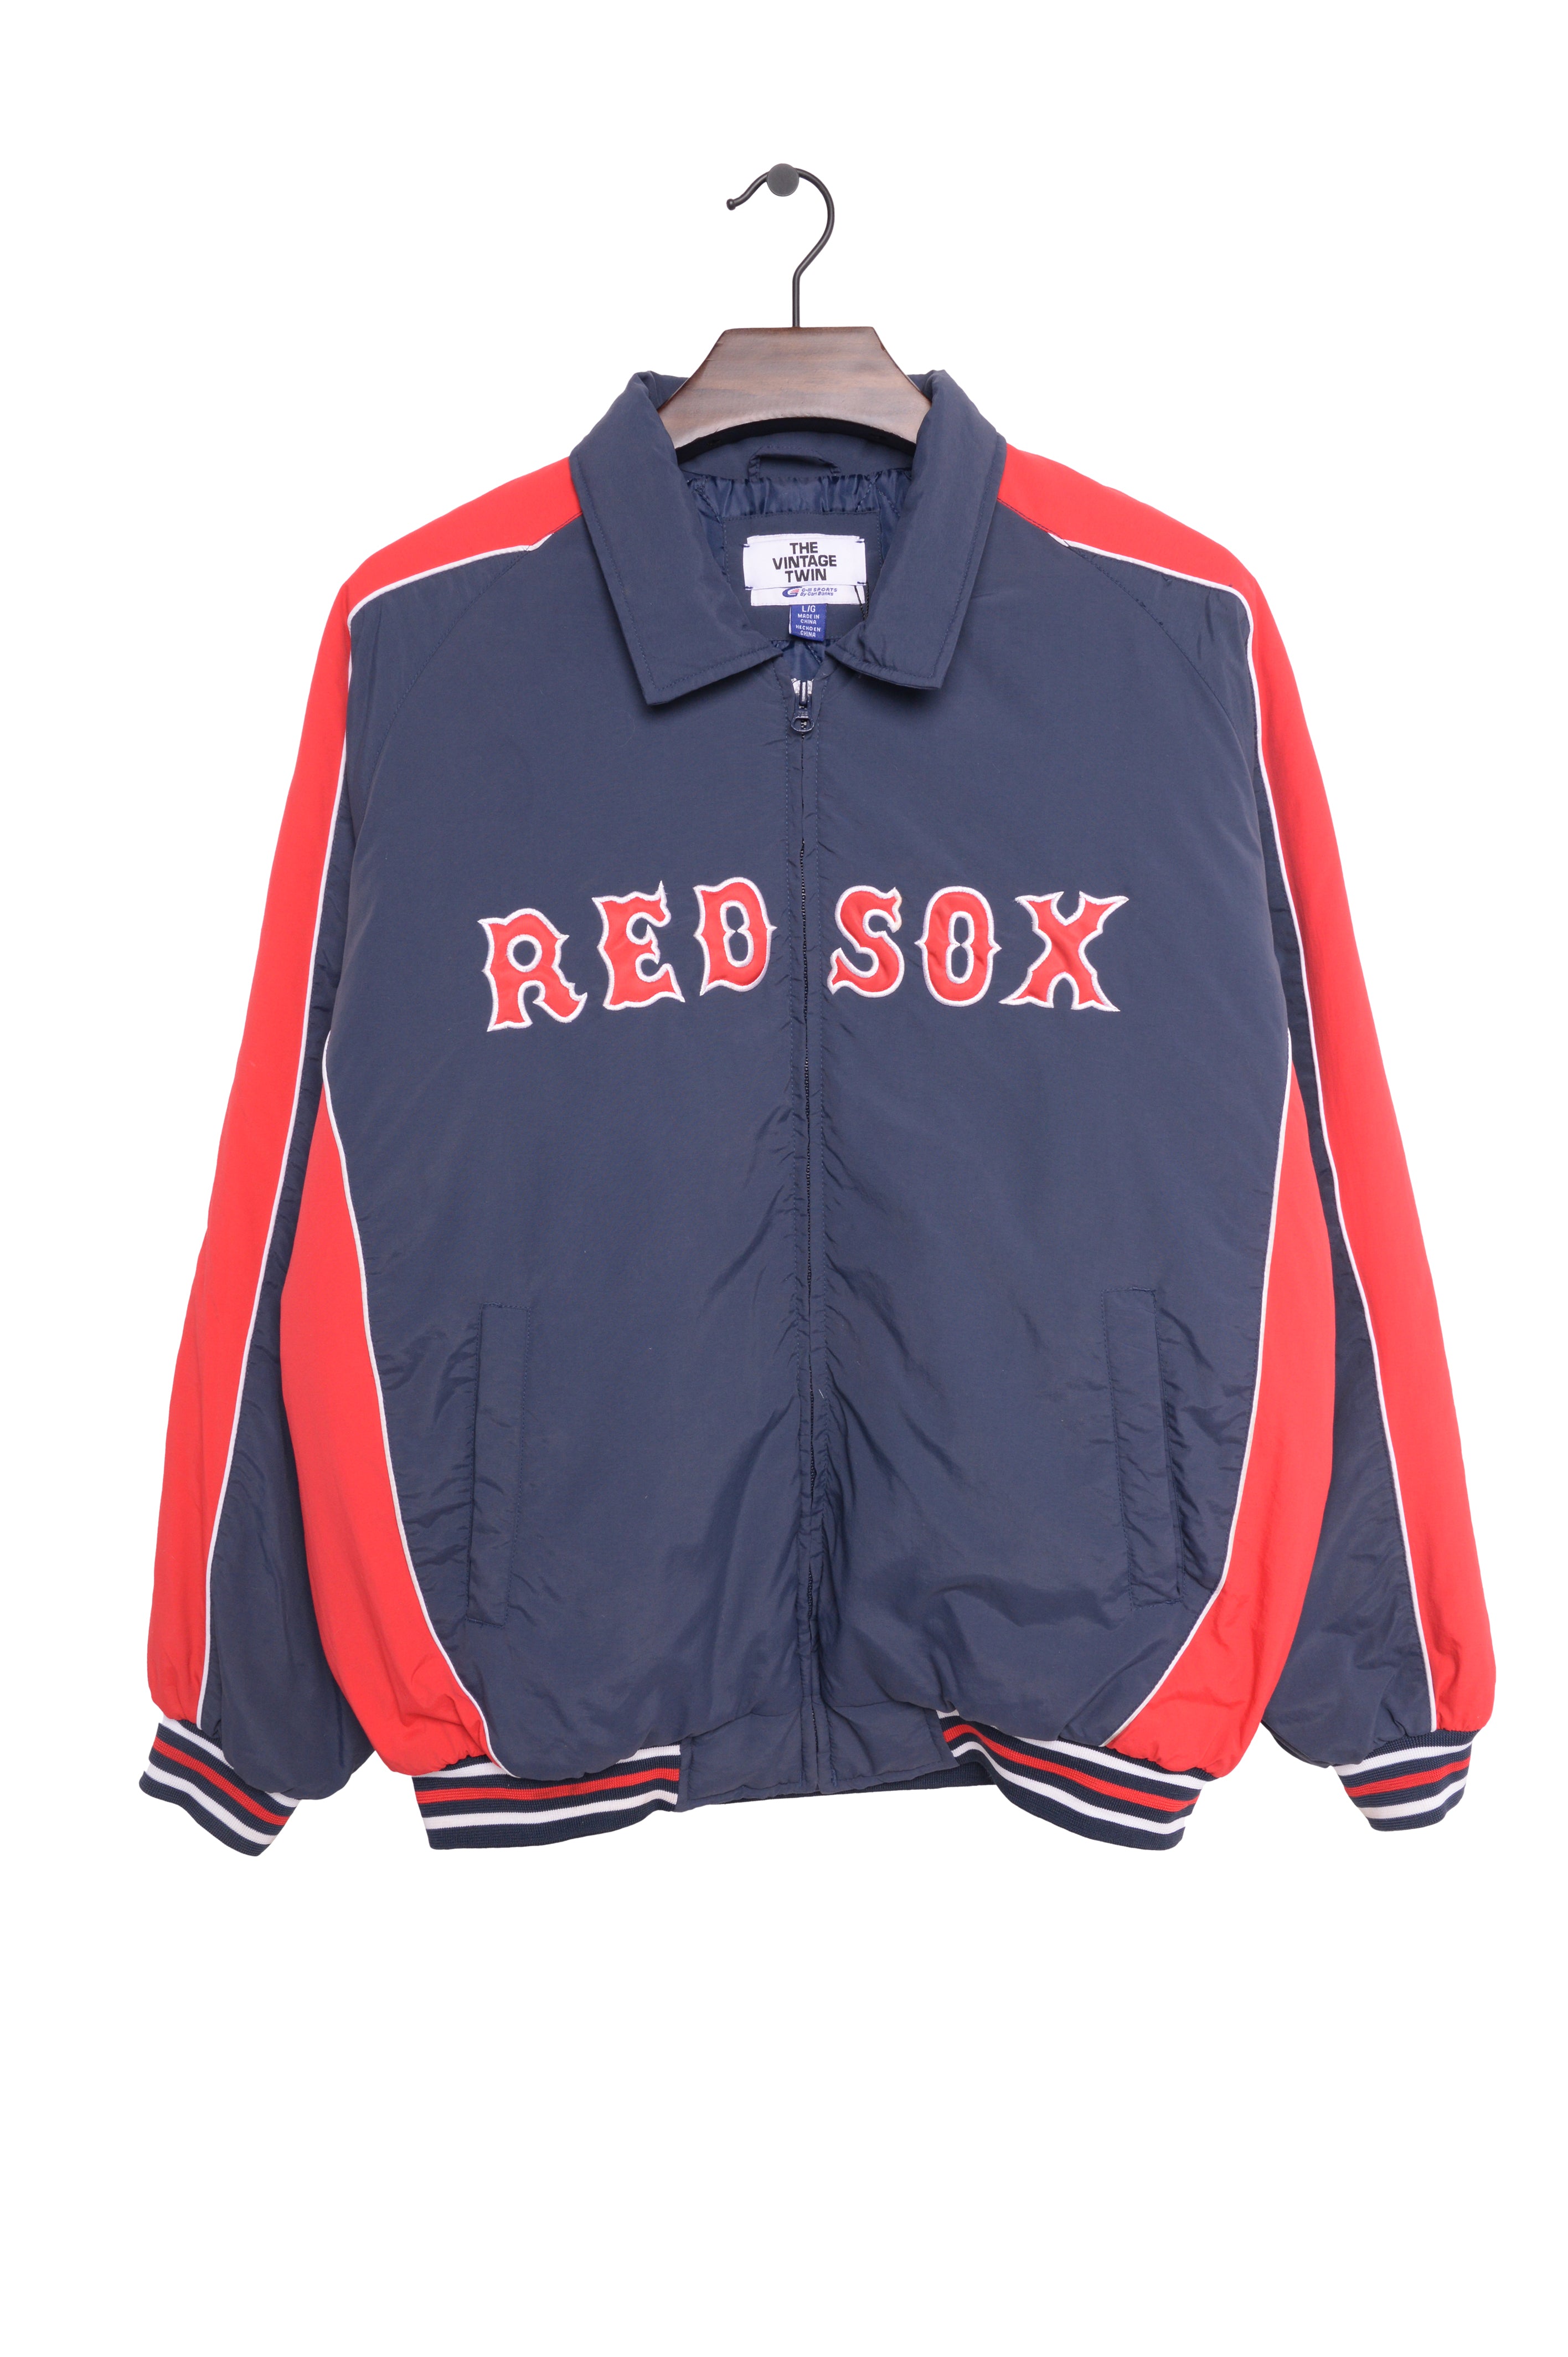 Majestic Red Sox Stadium Jacket-Med. - Athletic apparel